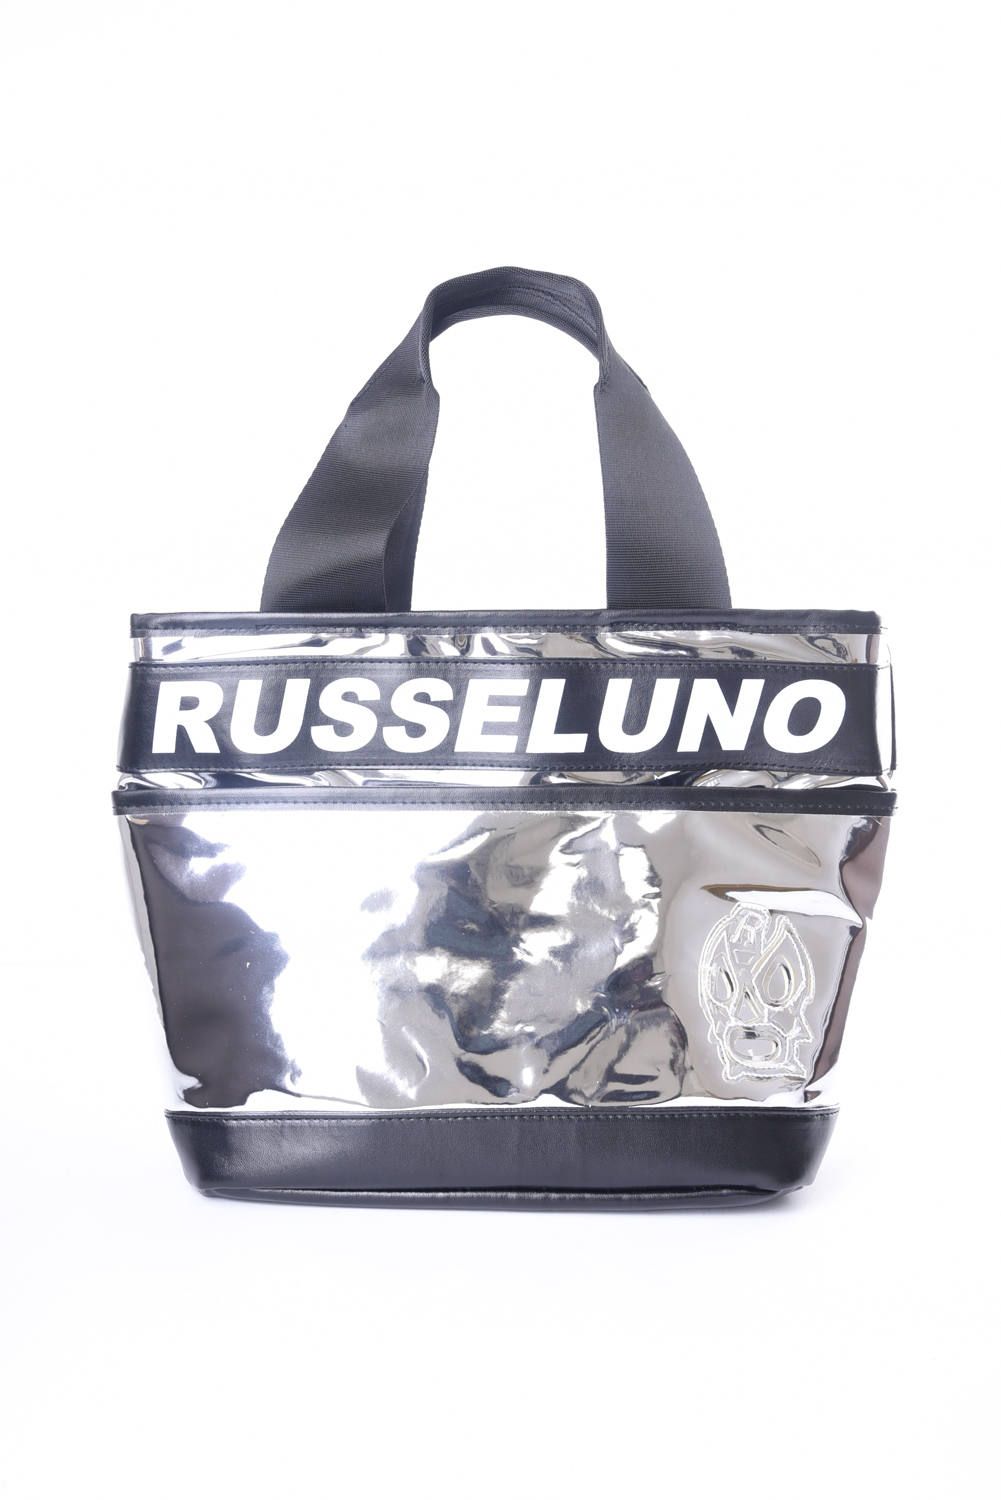 RUSSELUNO - SHINY CART BAG / 光沢 カートバッグ シルバー | GOSSIP GOLF